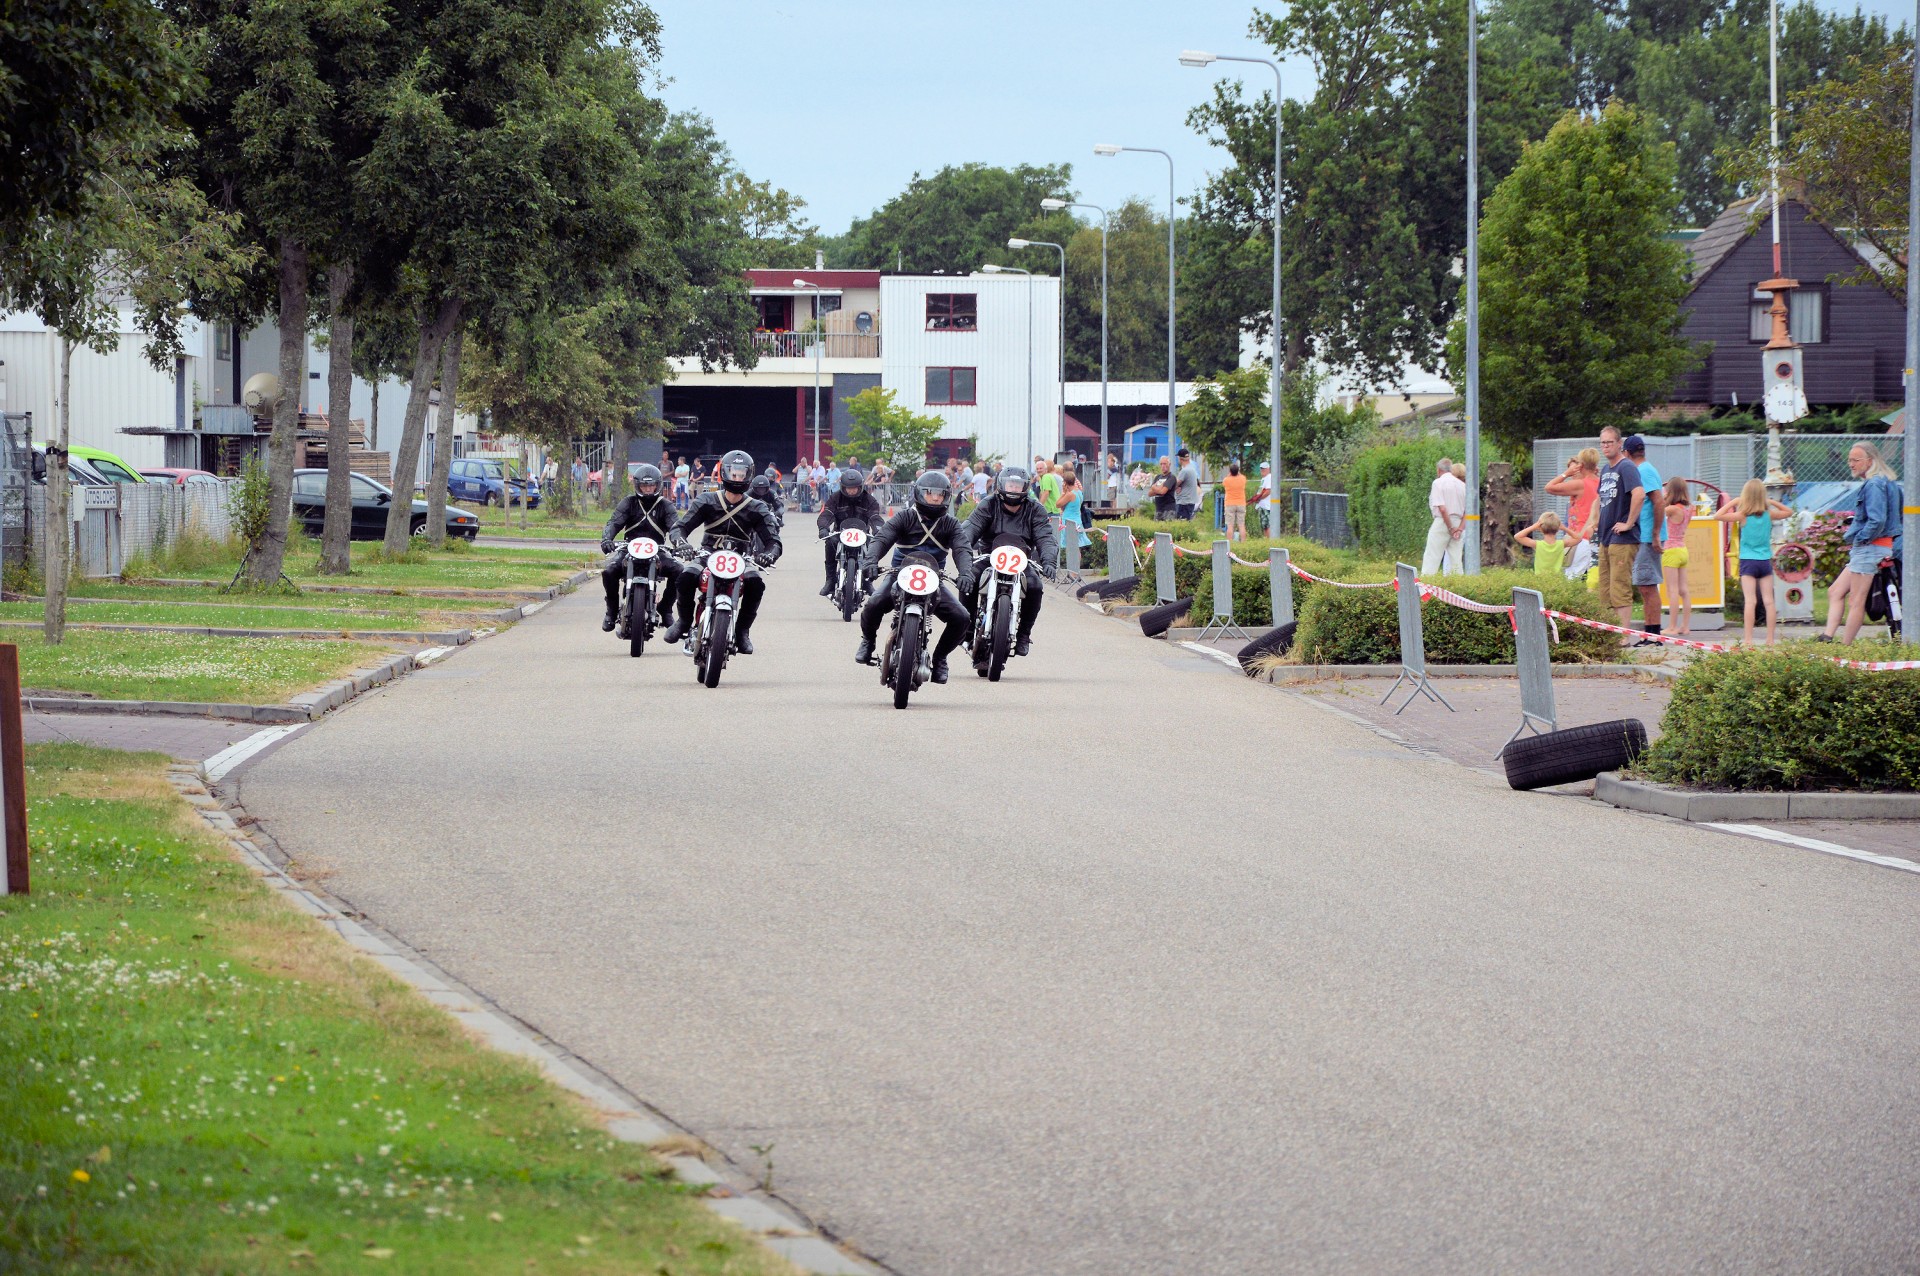 moped motorcycle motorbike free photo